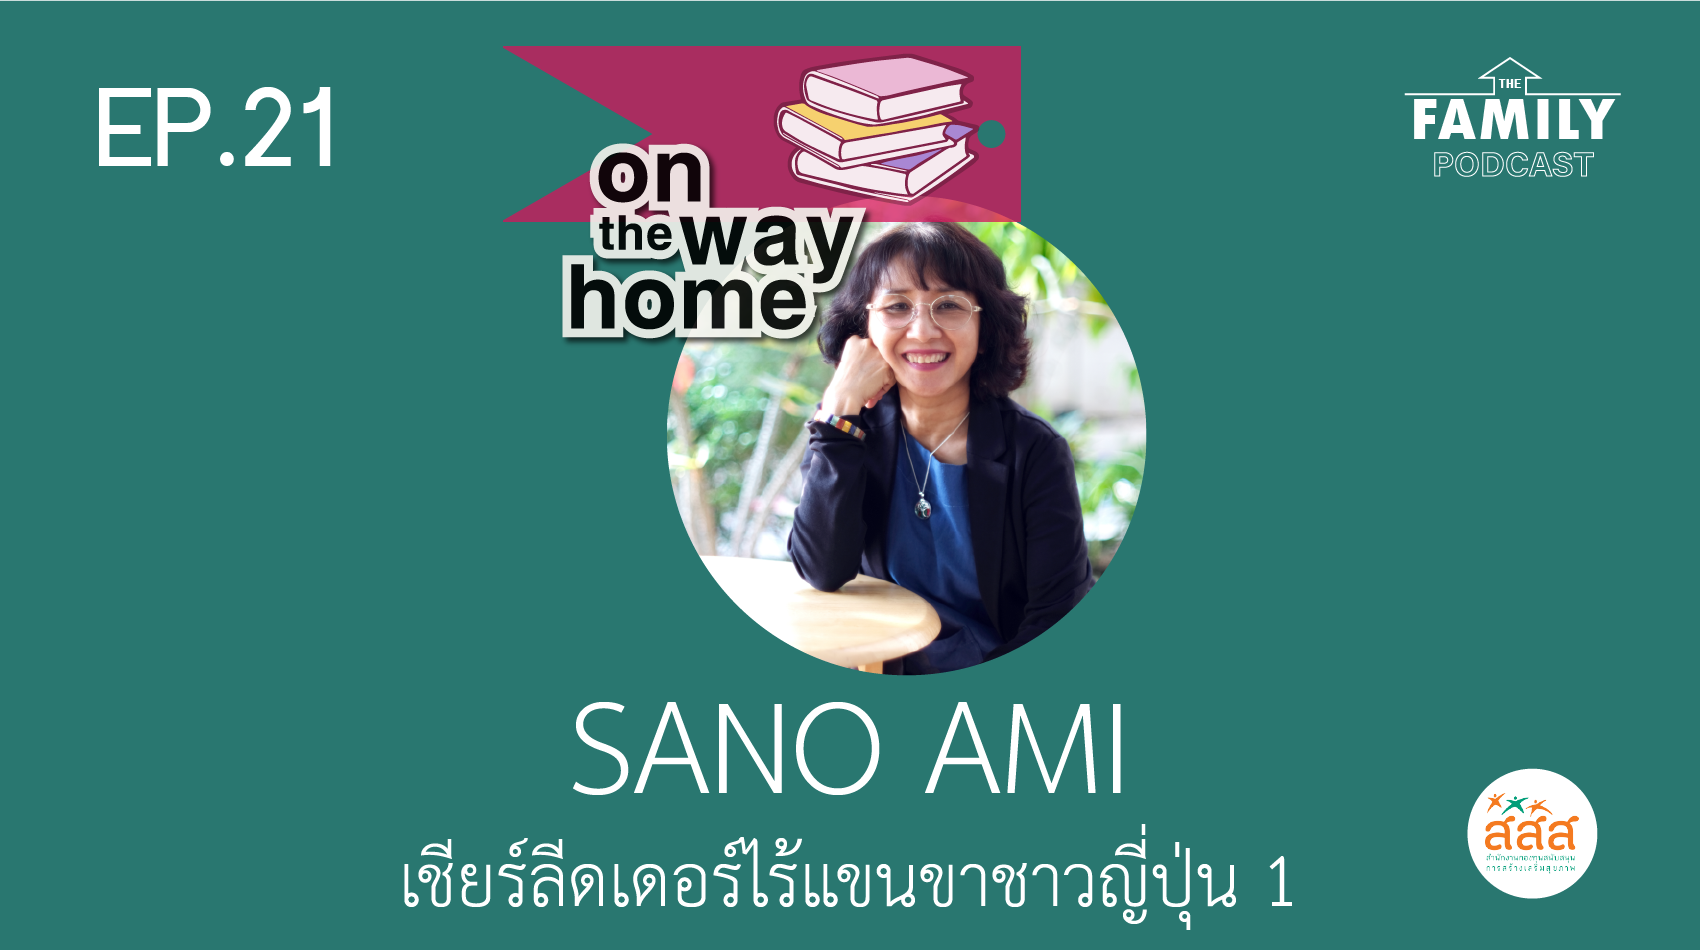 The Family Podcast On the Way Home EP.21 Sano Ami เชียร์ลีดเดอร์ไร้แขนขาชาวญี่ปุ่น 1